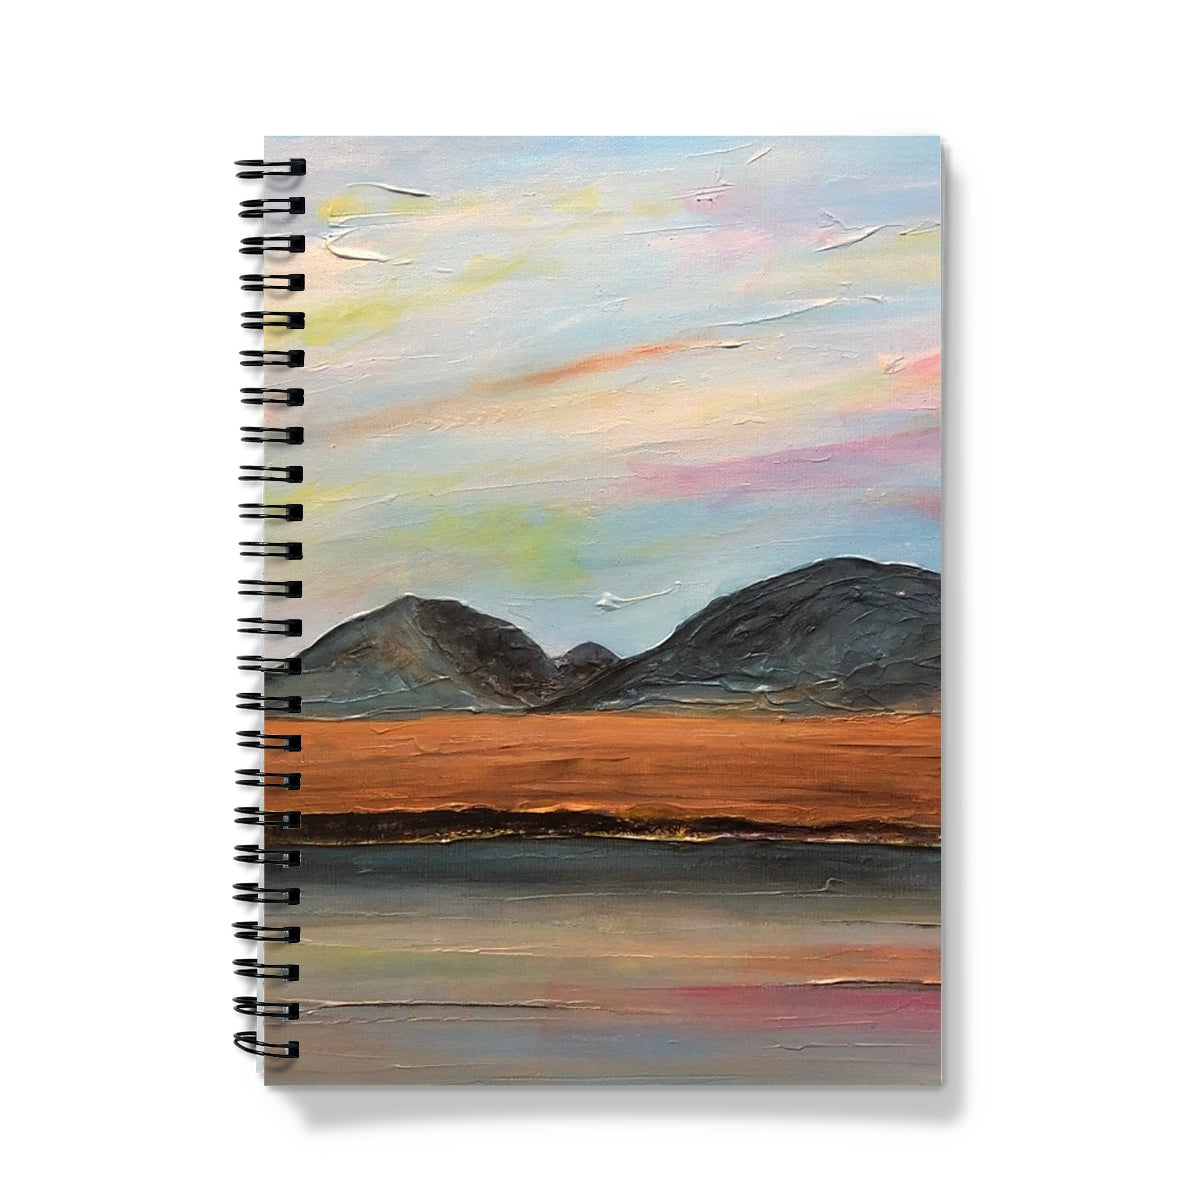 Jura Dawn Art Gifts Notebook-Journals & Notebooks-Hebridean Islands Art Gallery-A5-Graph-Paintings, Prints, Homeware, Art Gifts From Scotland By Scottish Artist Kevin Hunter